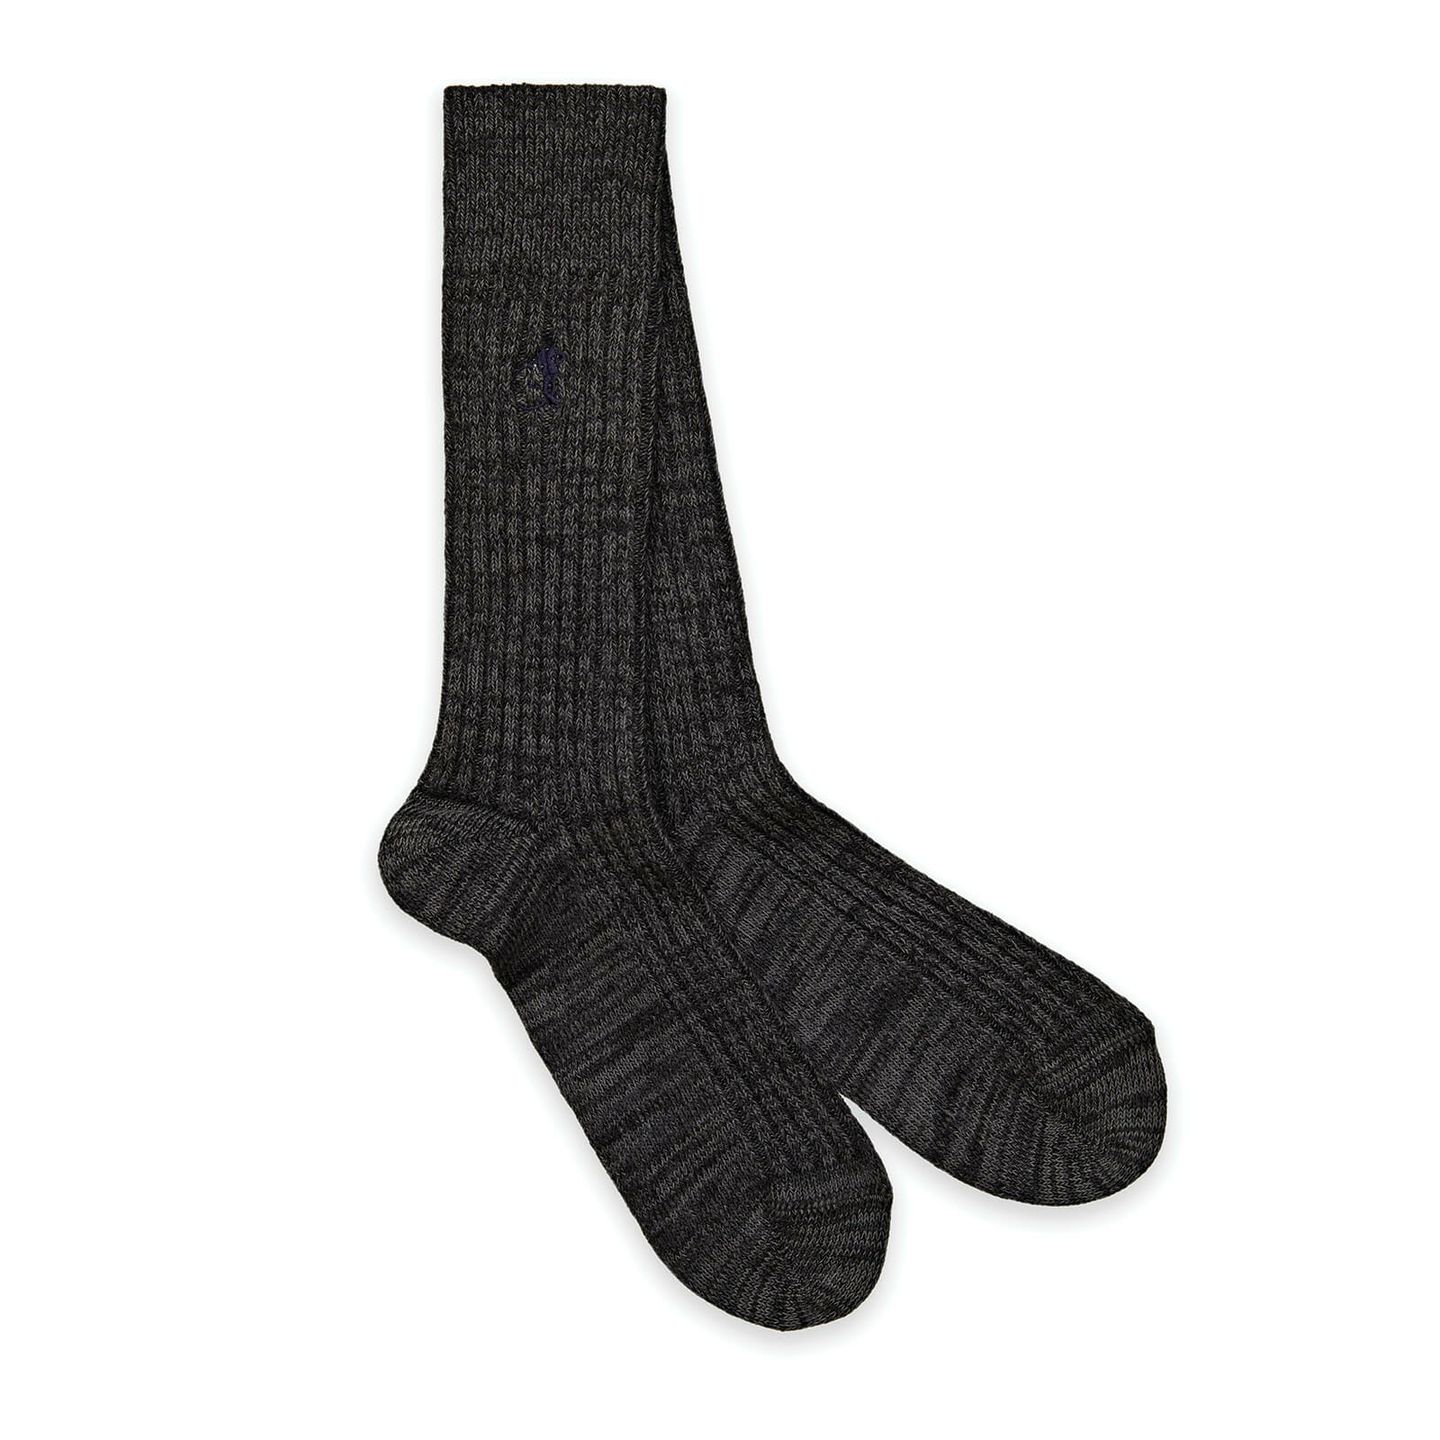 Pair of boot socks in slate grey